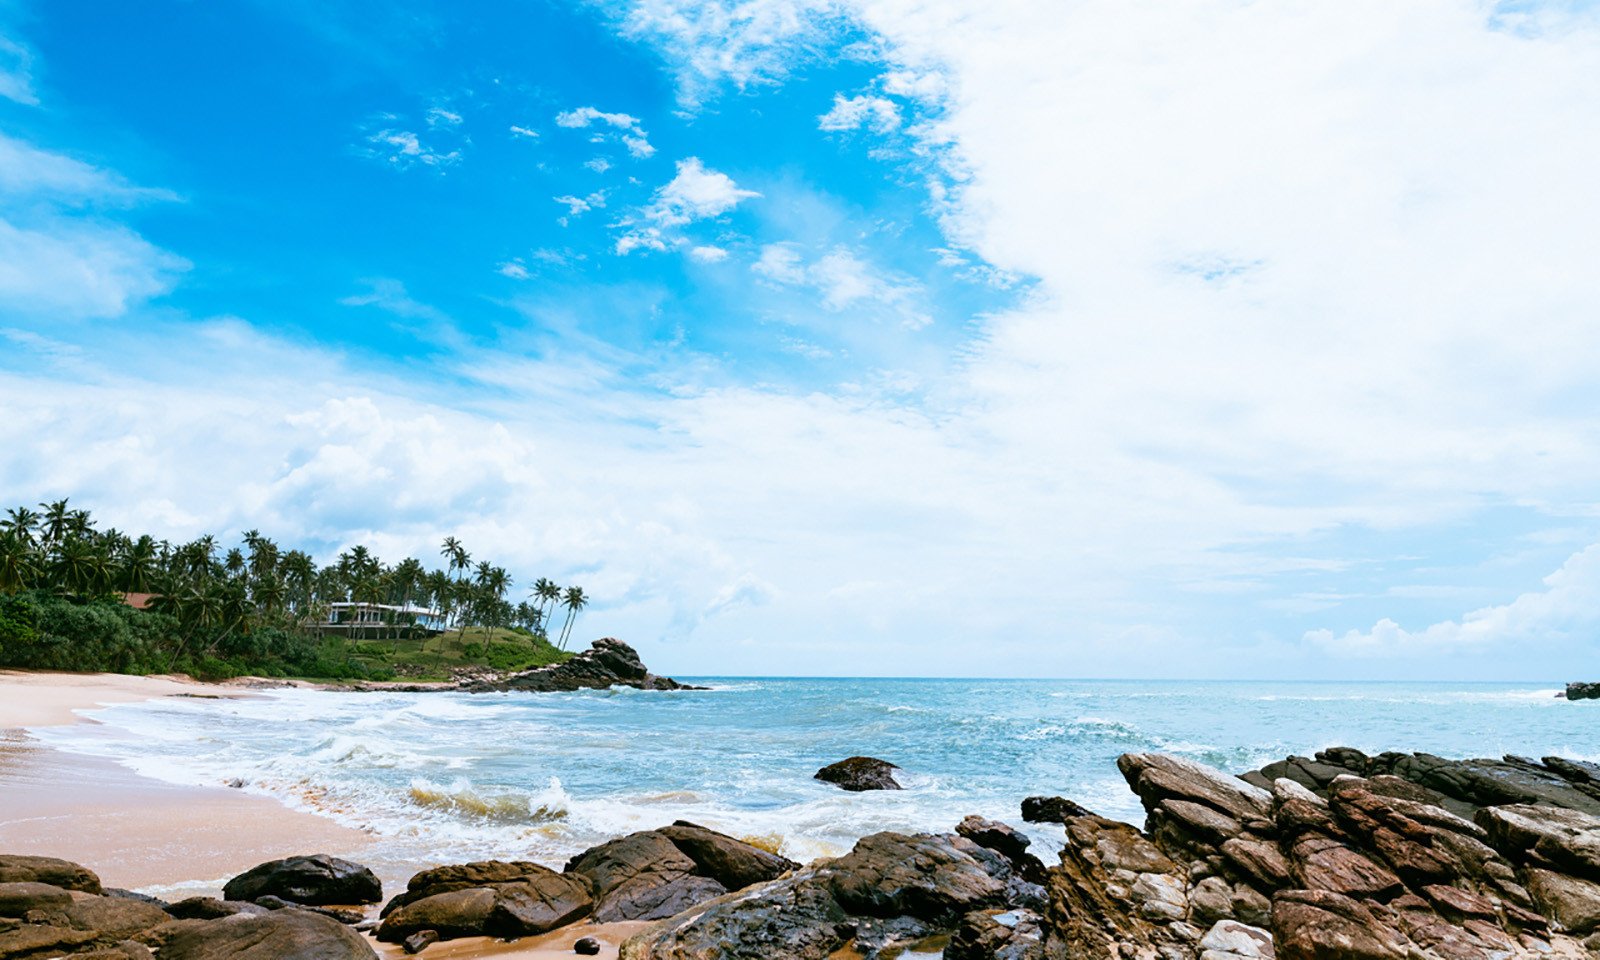  Resort Rocks. Anantara Peace Haven, Sri Lanka